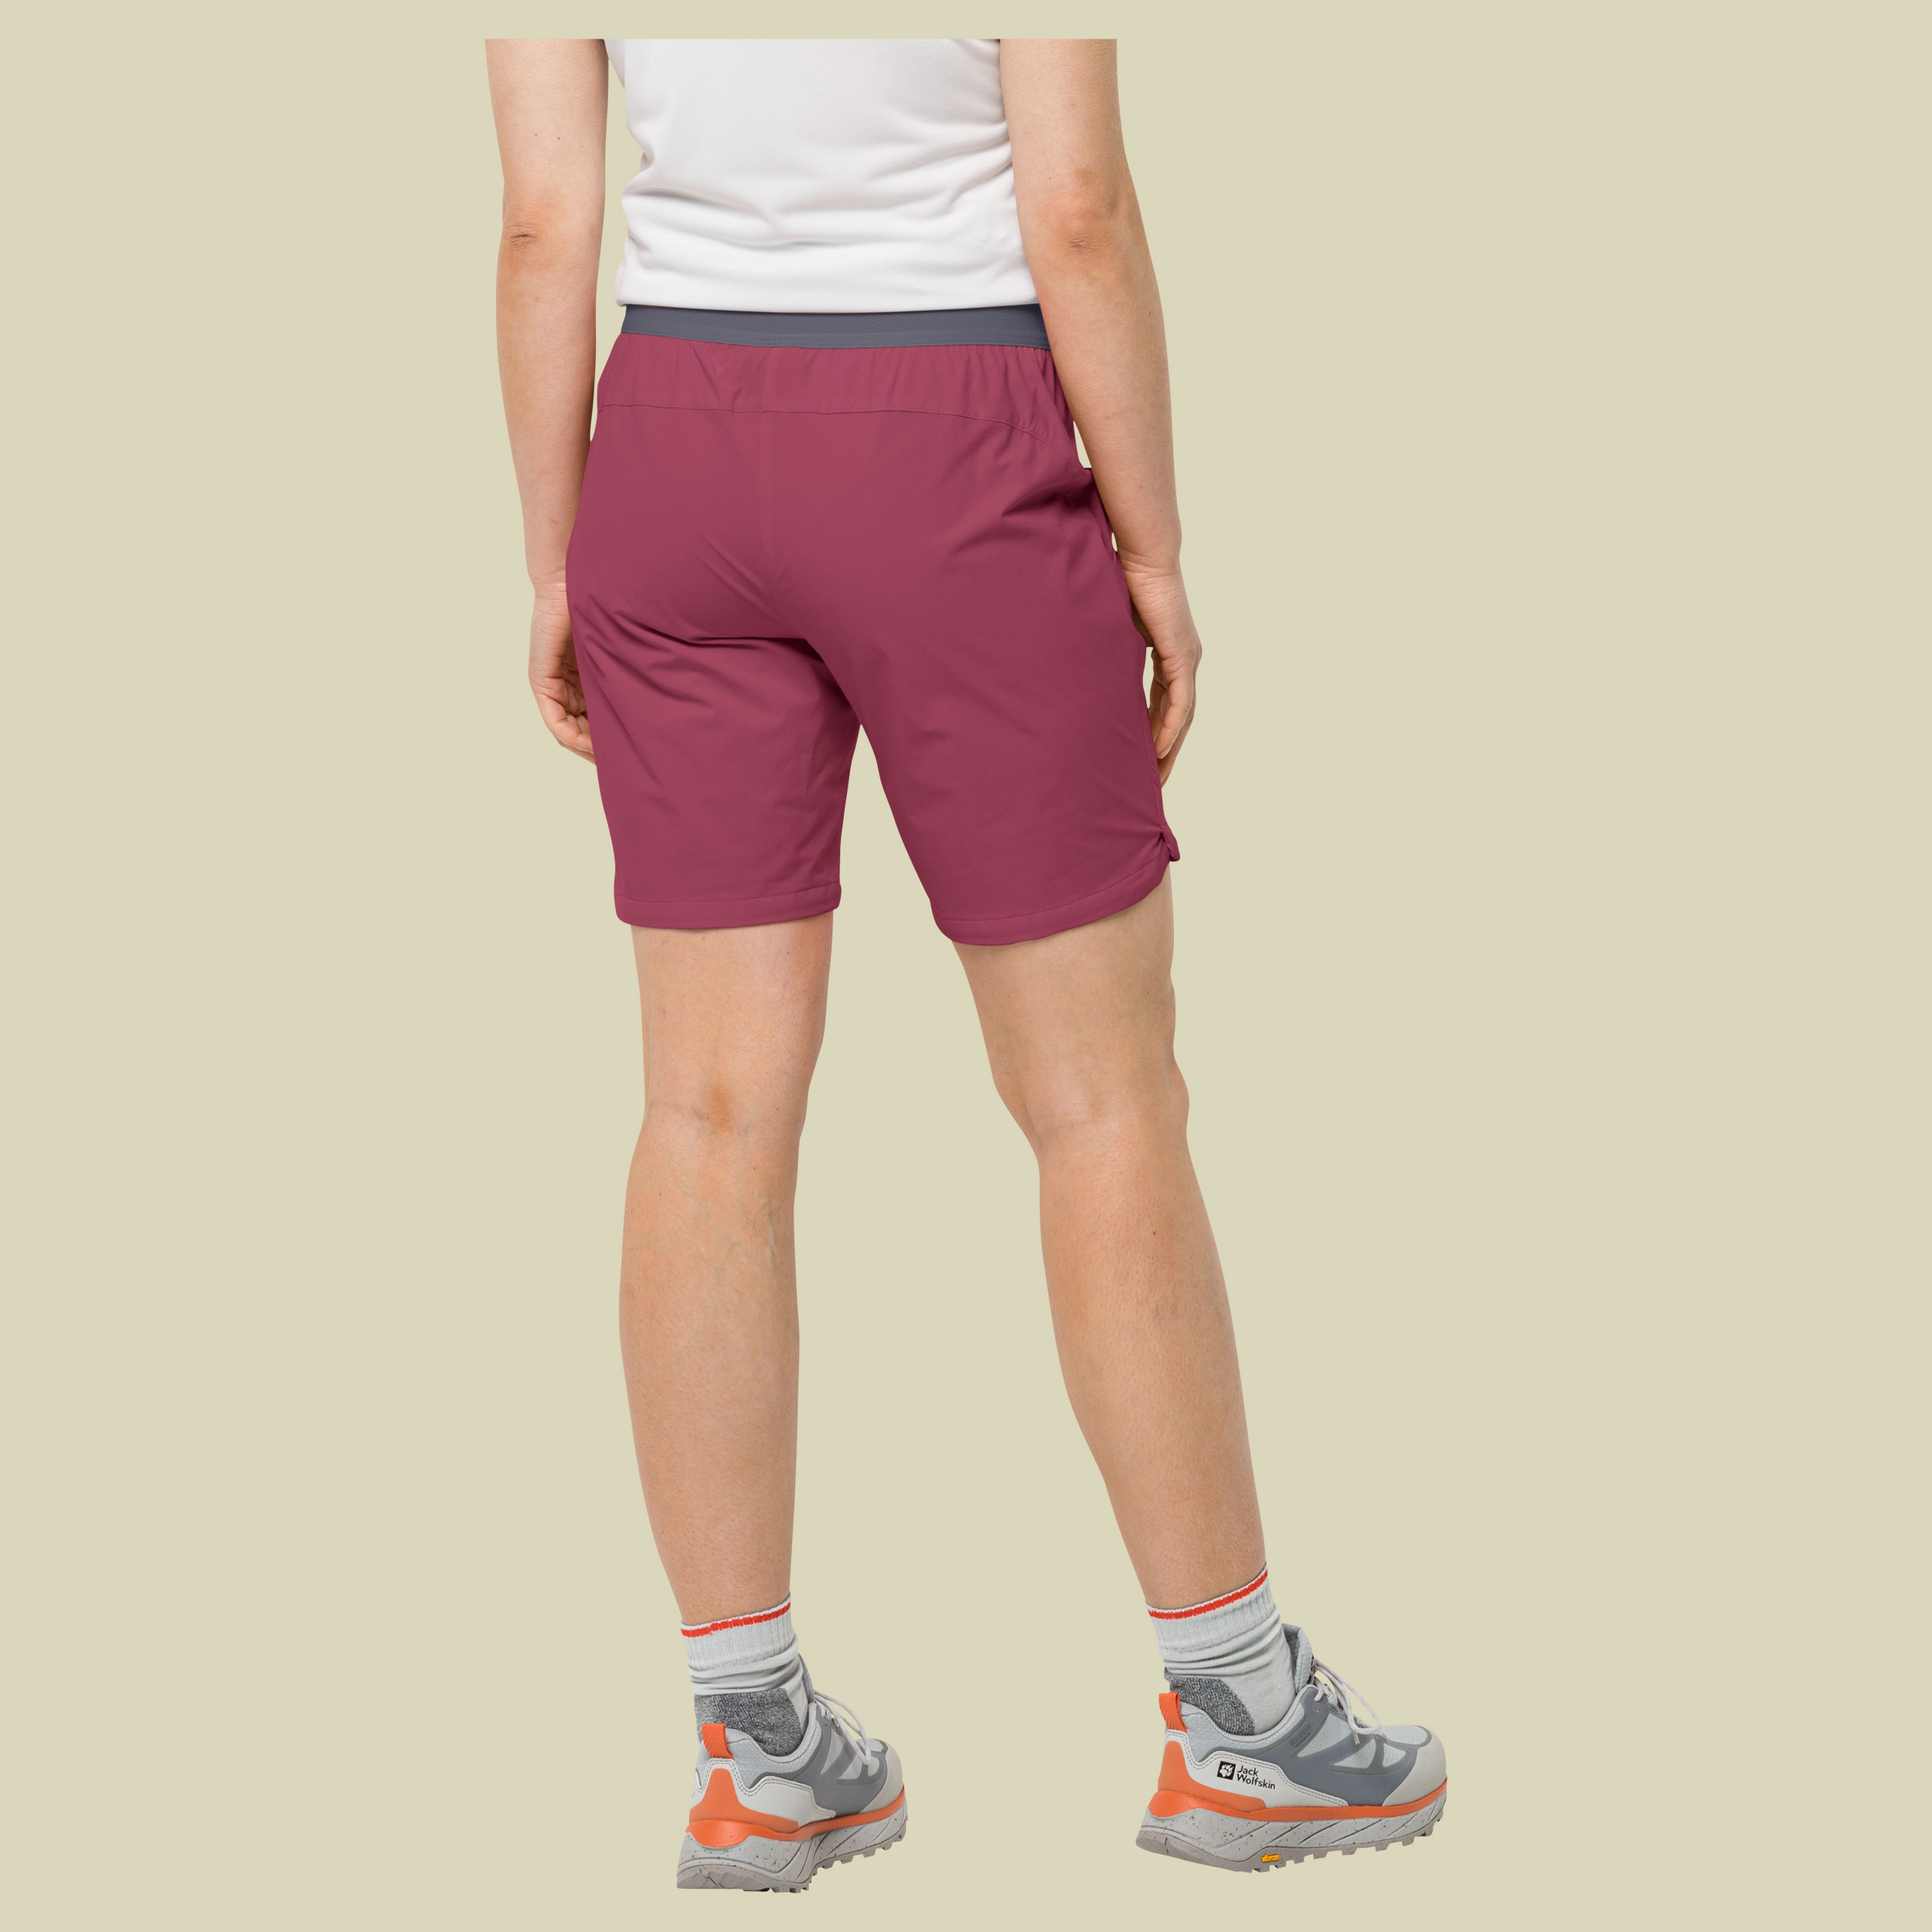 Hilltop Trail Shorts Women Größe 36 Farbe sangria red